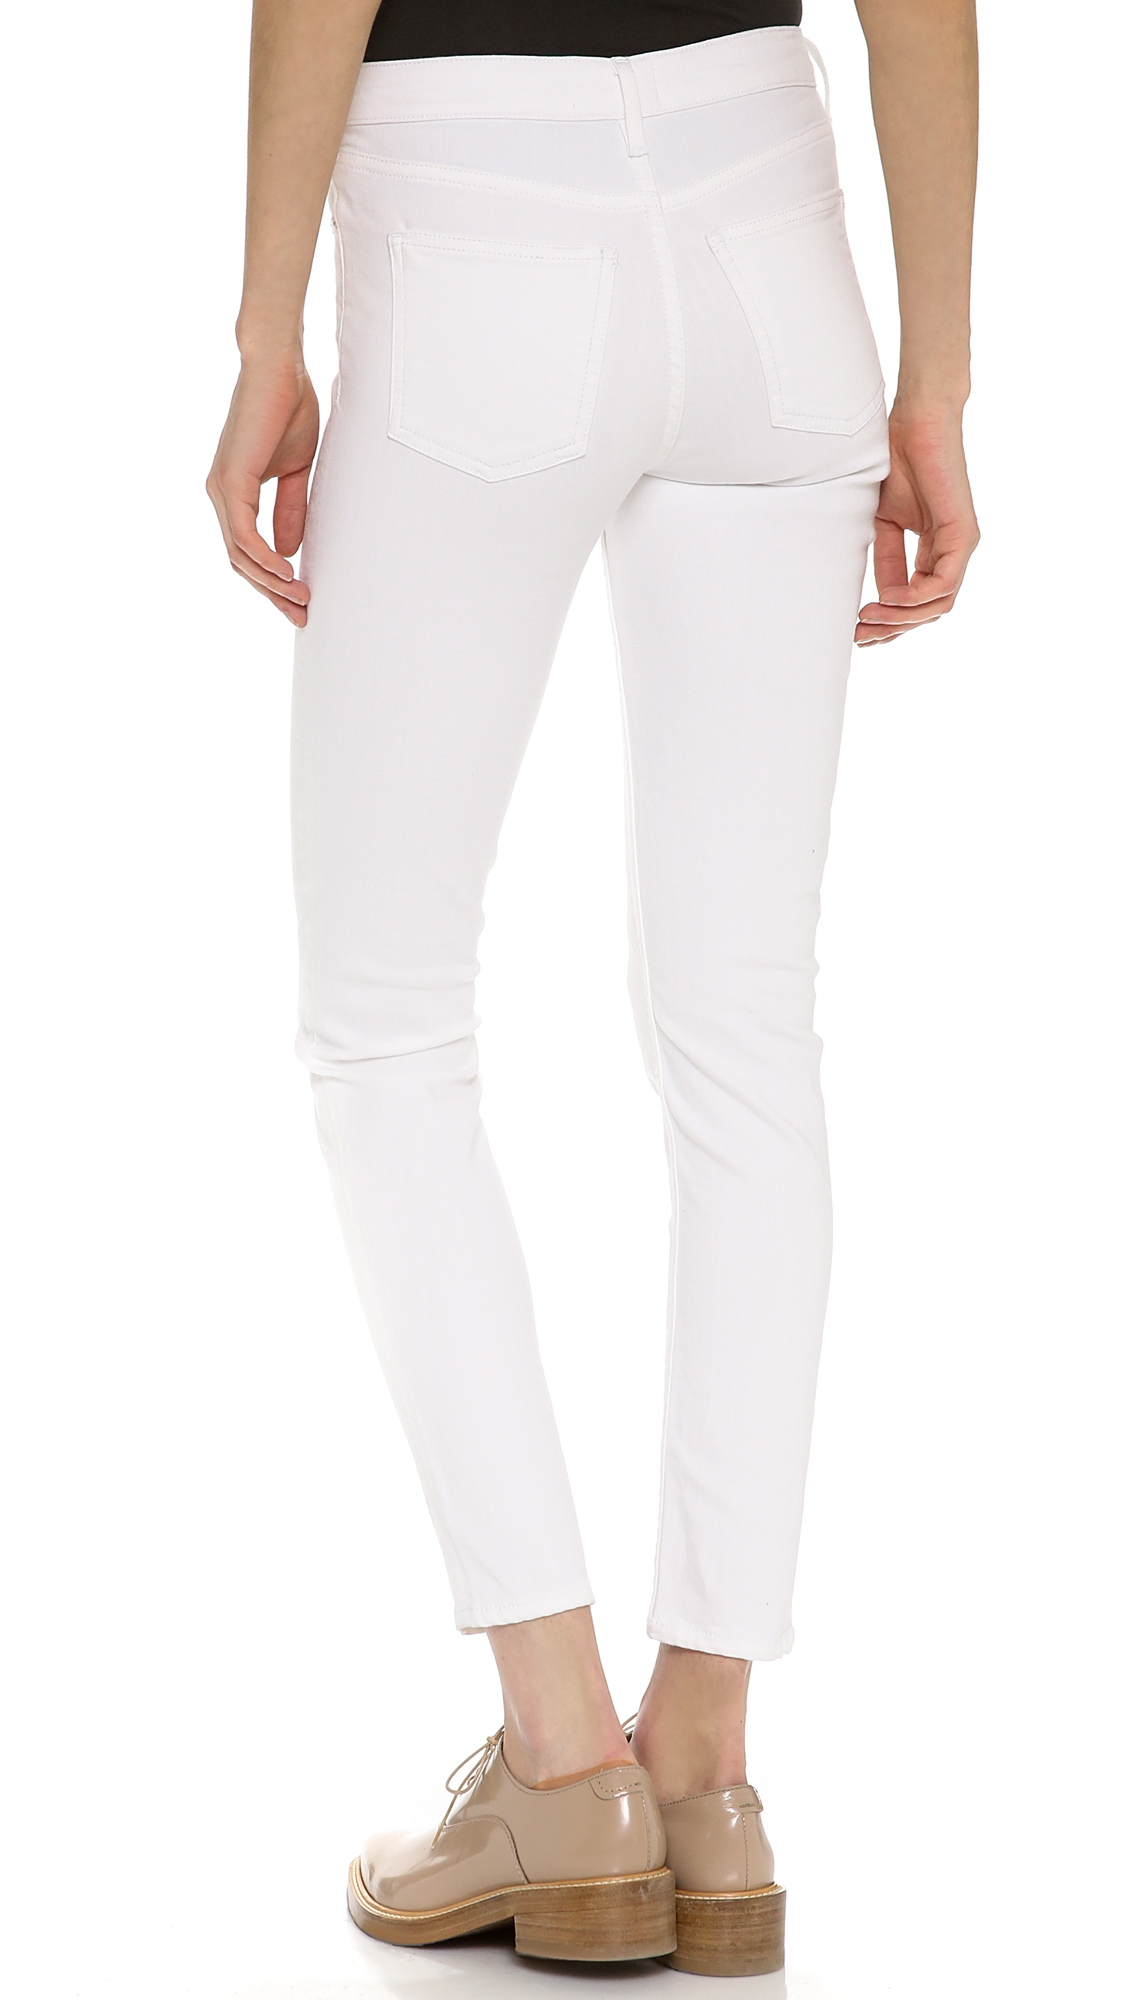 Acne Studios Skin 5 Jeans - Optic White | Lyst